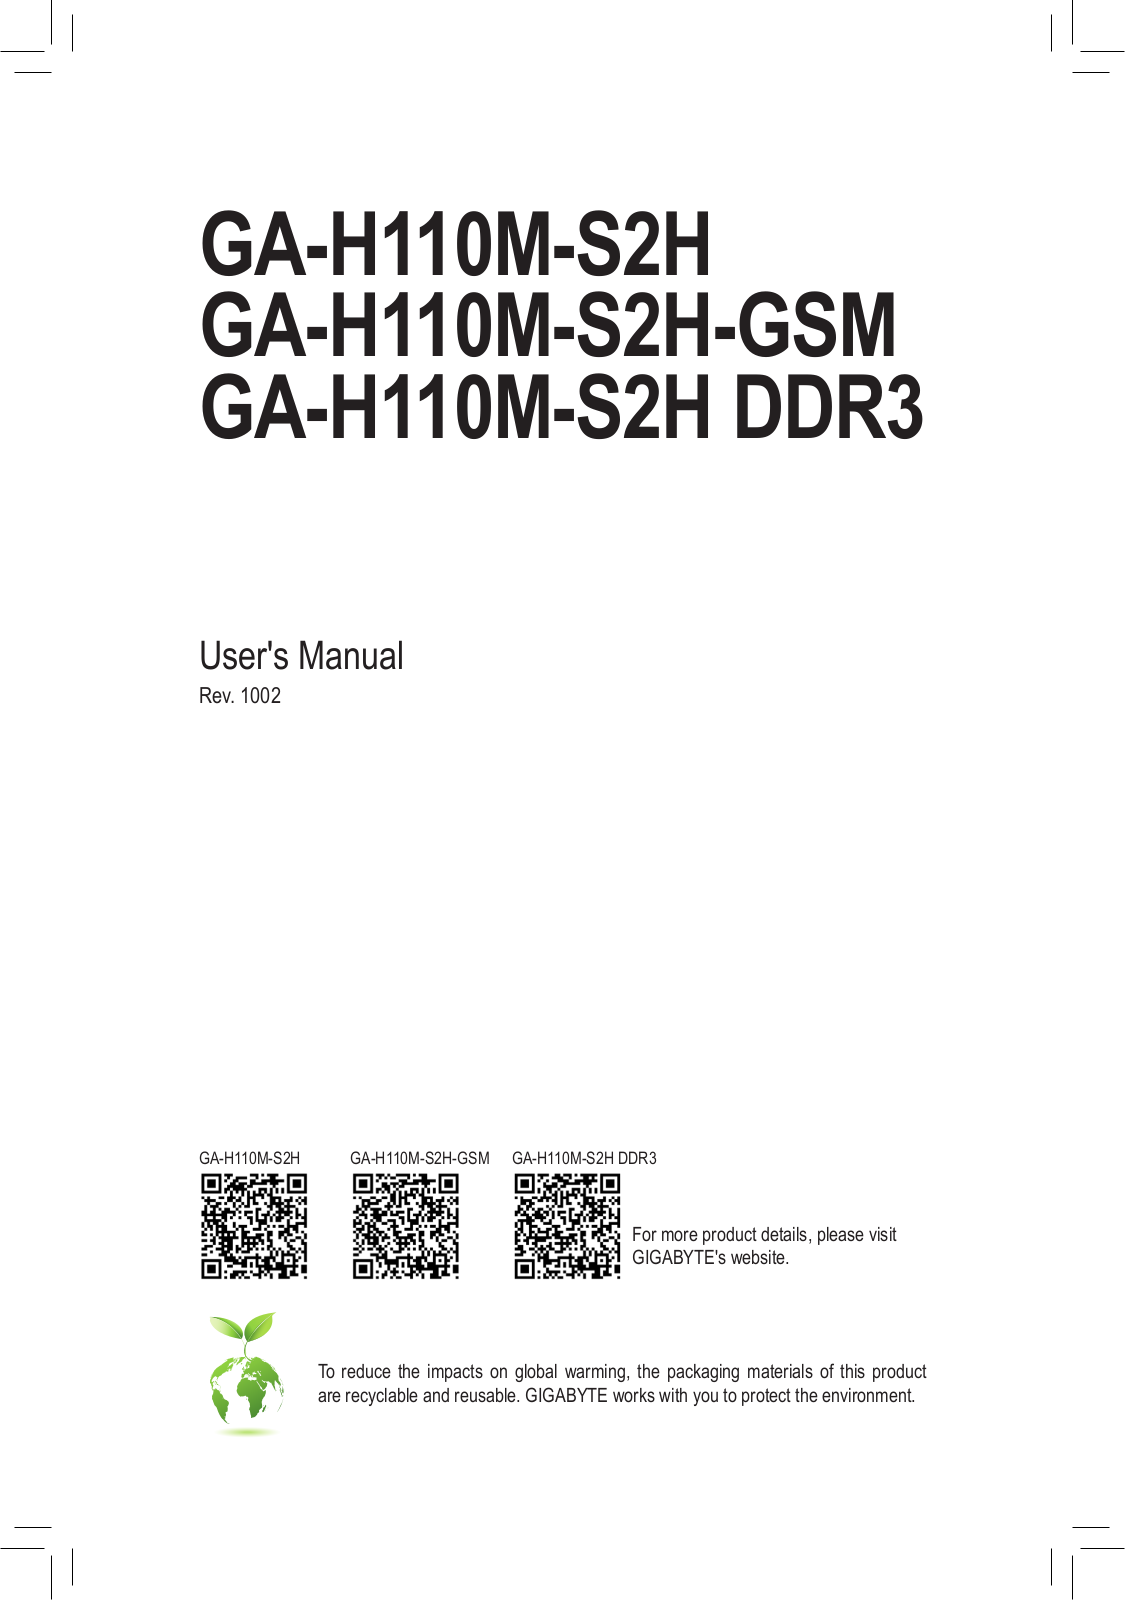 Gigabyte GA-H110M-S2H Service Manual